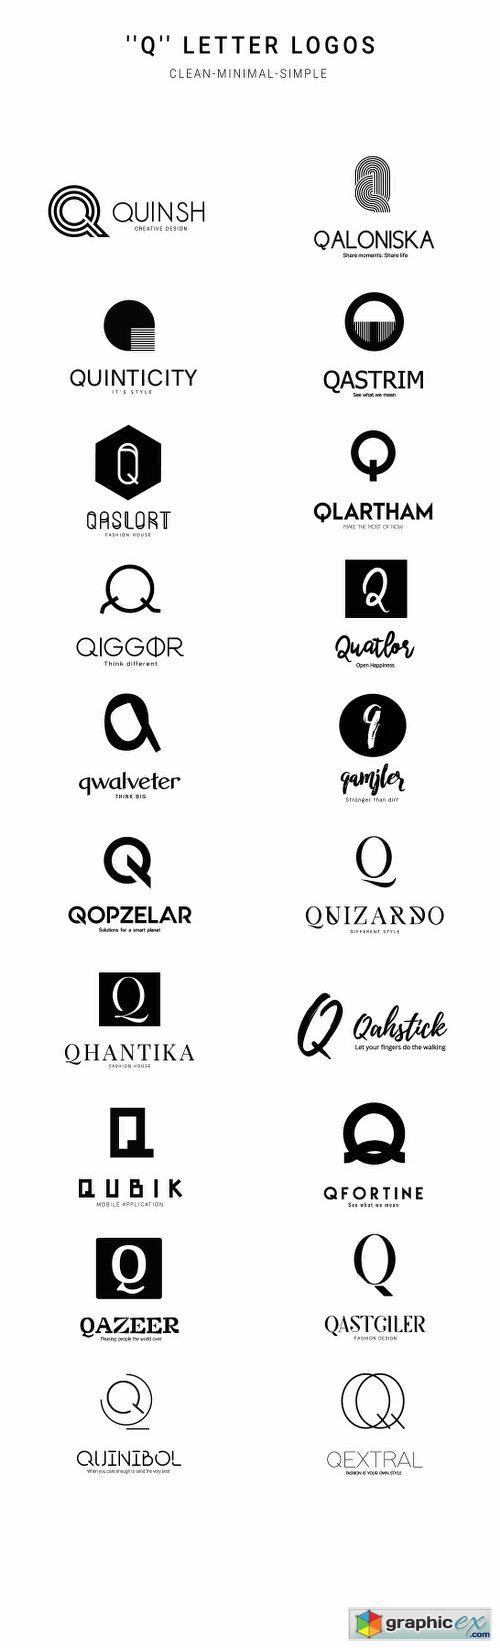 20 "Q" Letter Alphabetic Logos